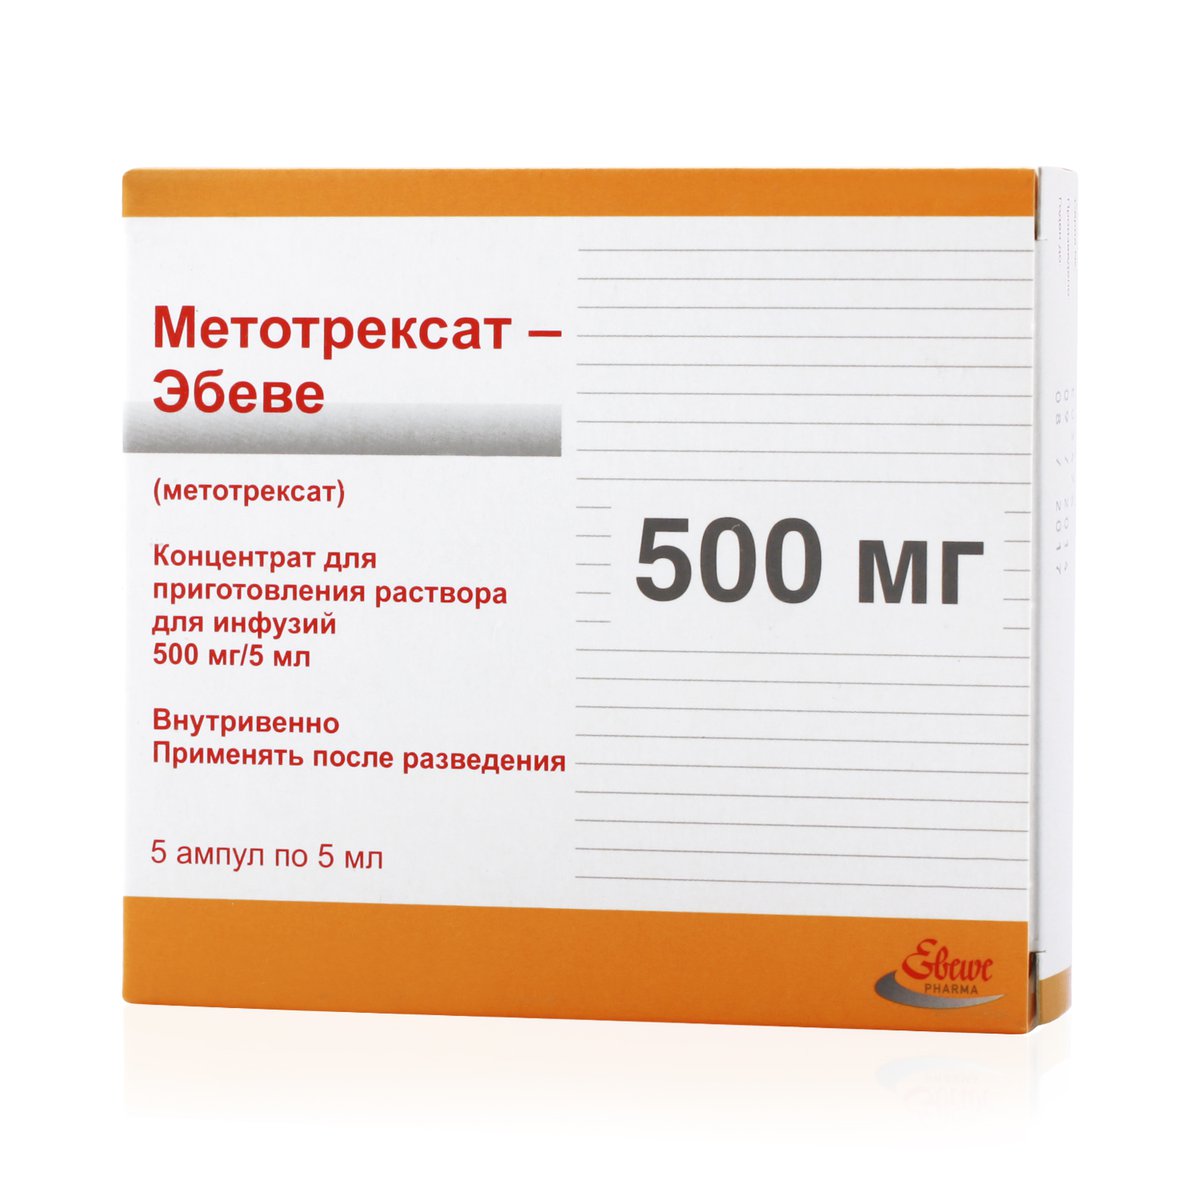 Метотрексат-Эбеве (концентрат, 5 шт, 5 мл, 500 мг, для инфузий) - цена .